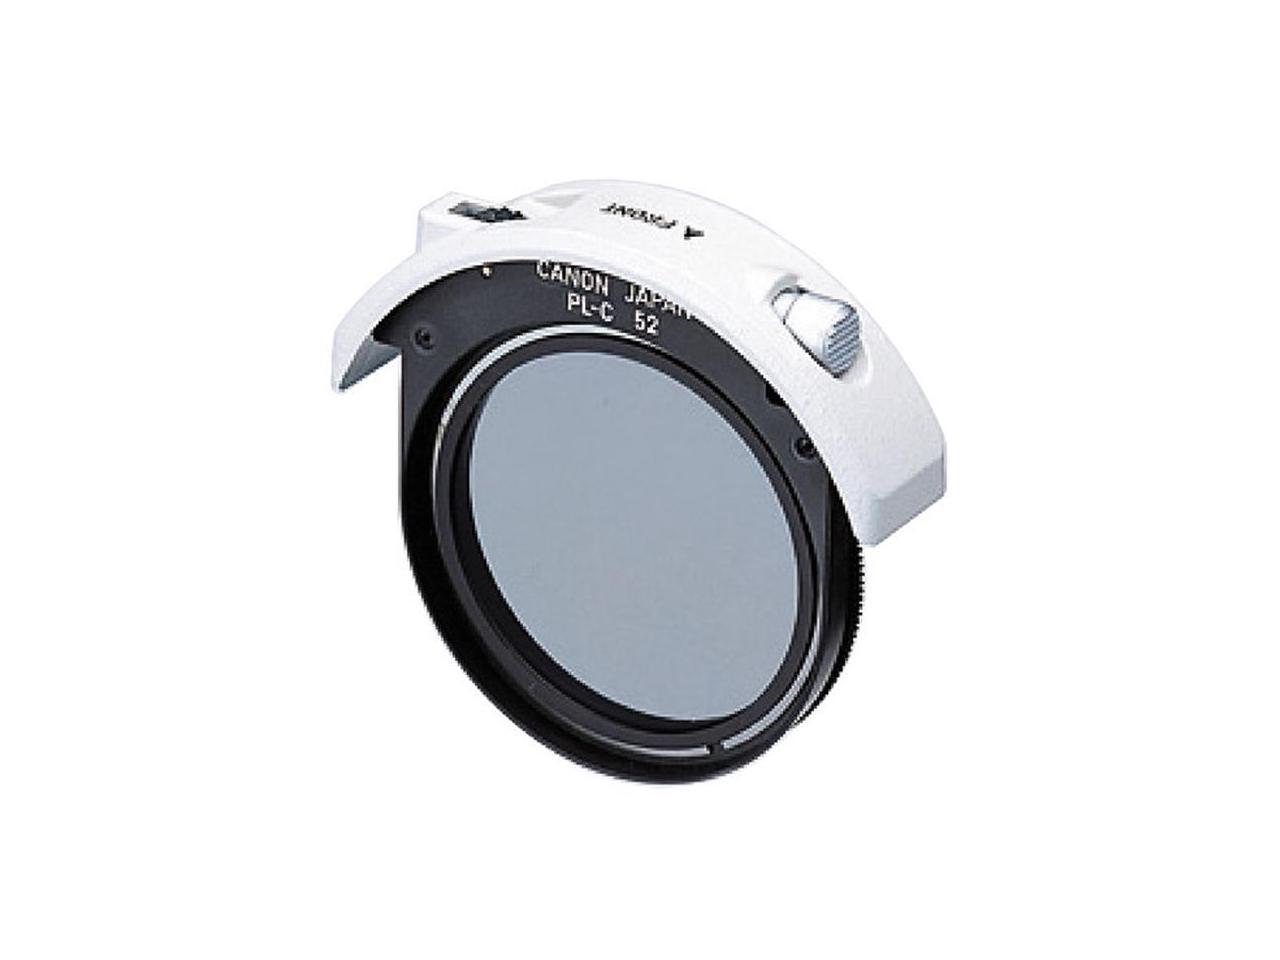 Canon 2585A001 52mm Drop-in Circular Polarizing Filter PL-C 52